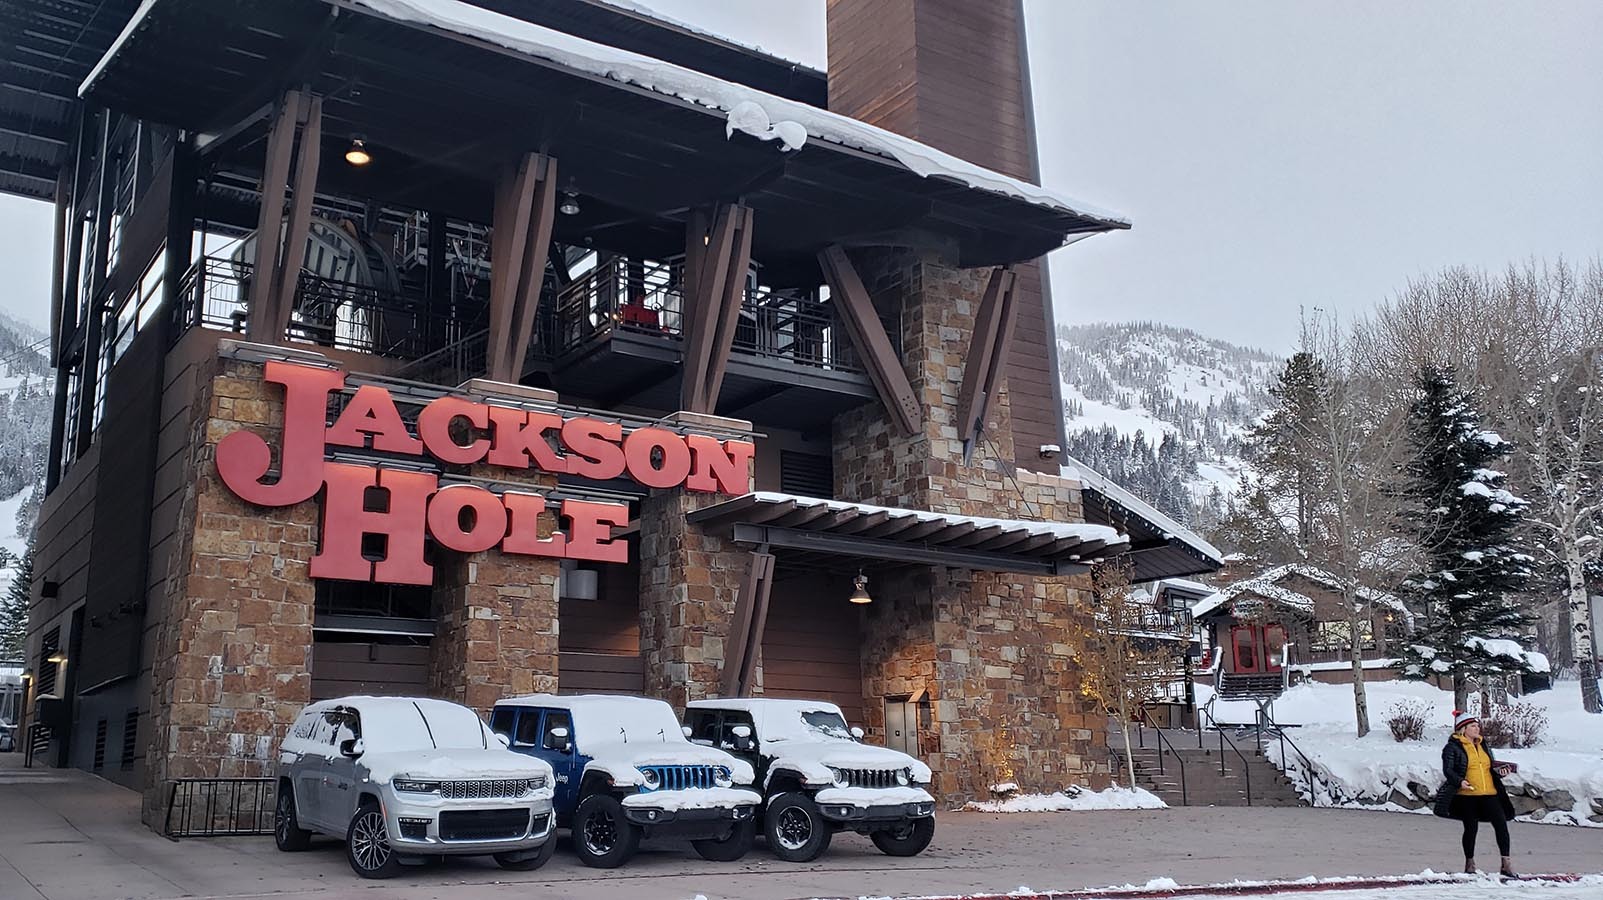 Texas Couple Sues Jackson Ski Resort, Rental Company For “Catastrophic” Crash Your Wyoming News Source